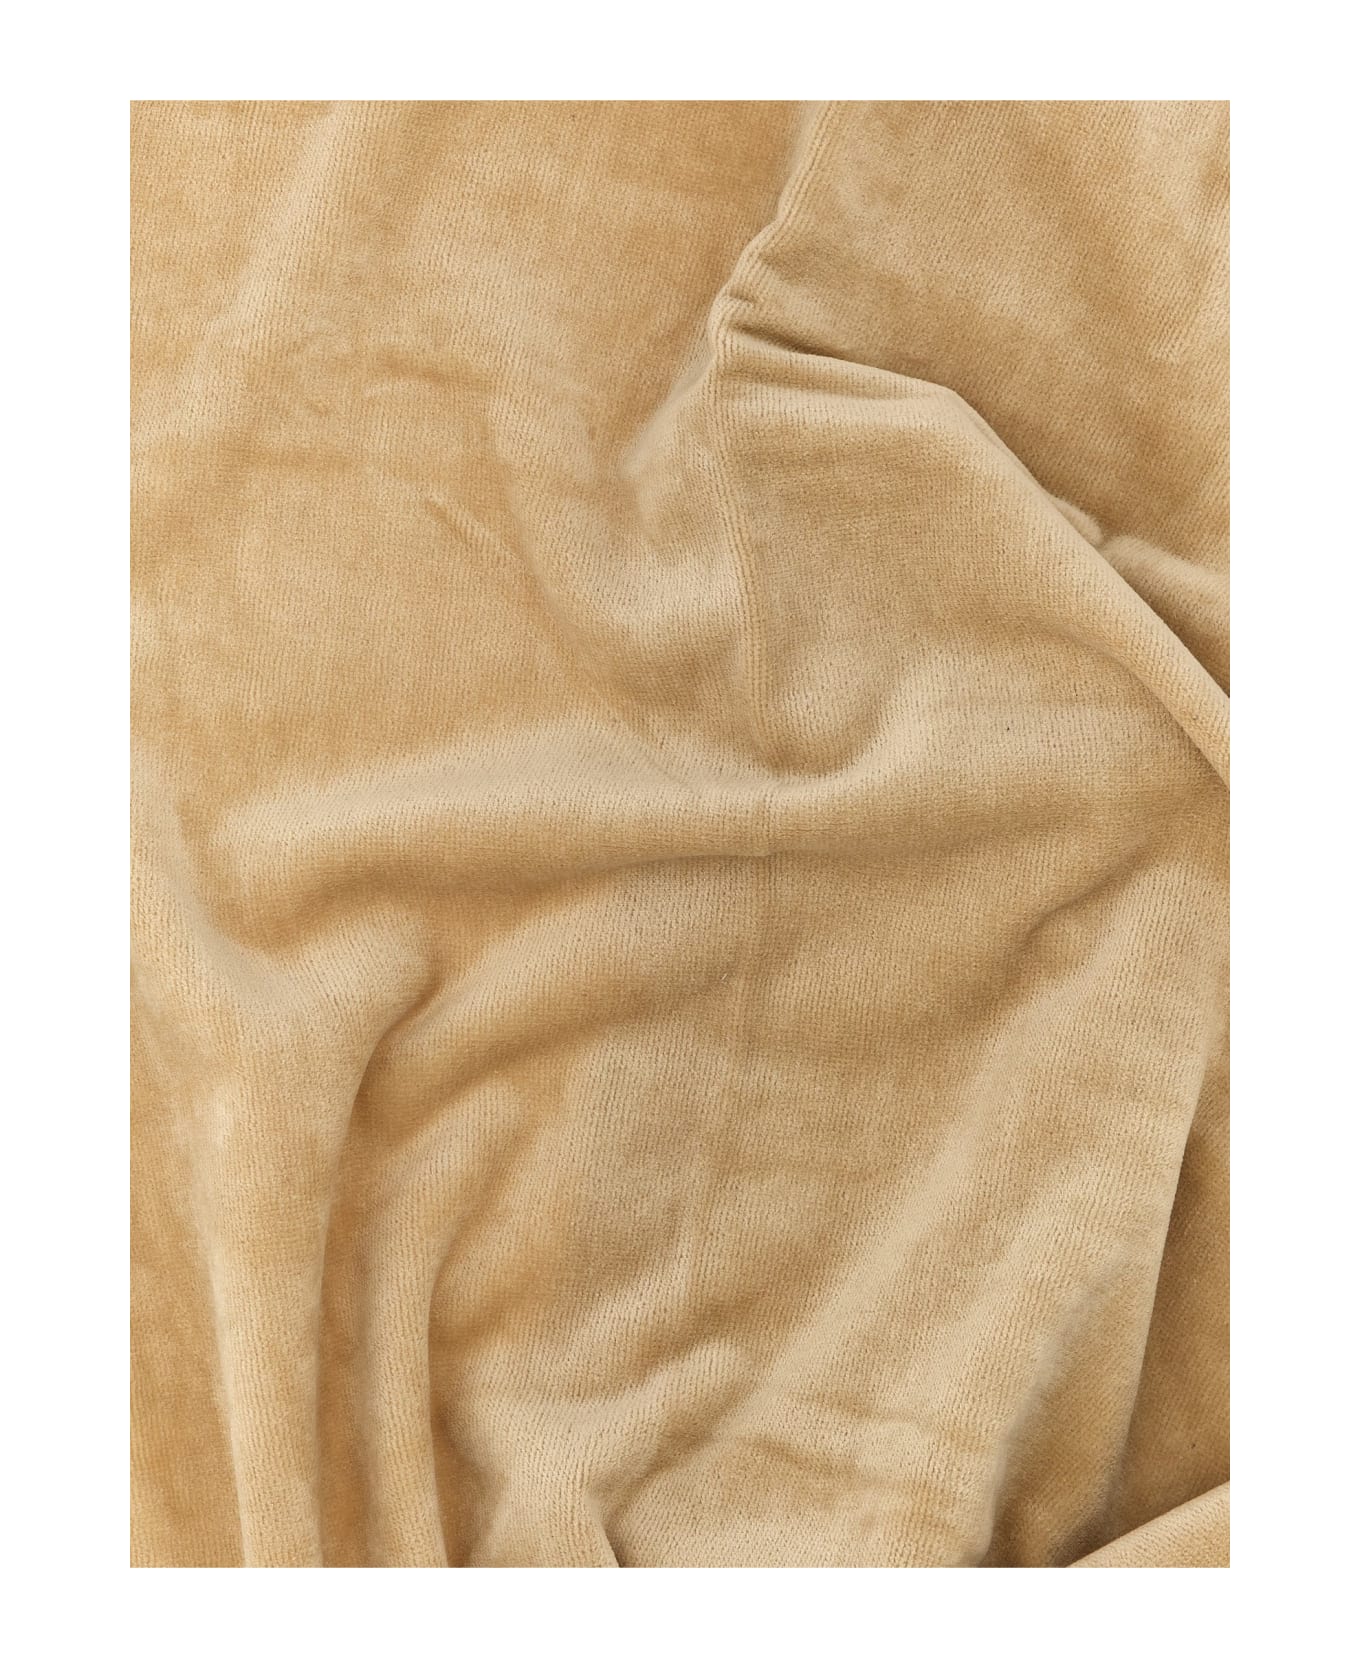 Isabel Marant 'soverato' Beach Towel - Beige